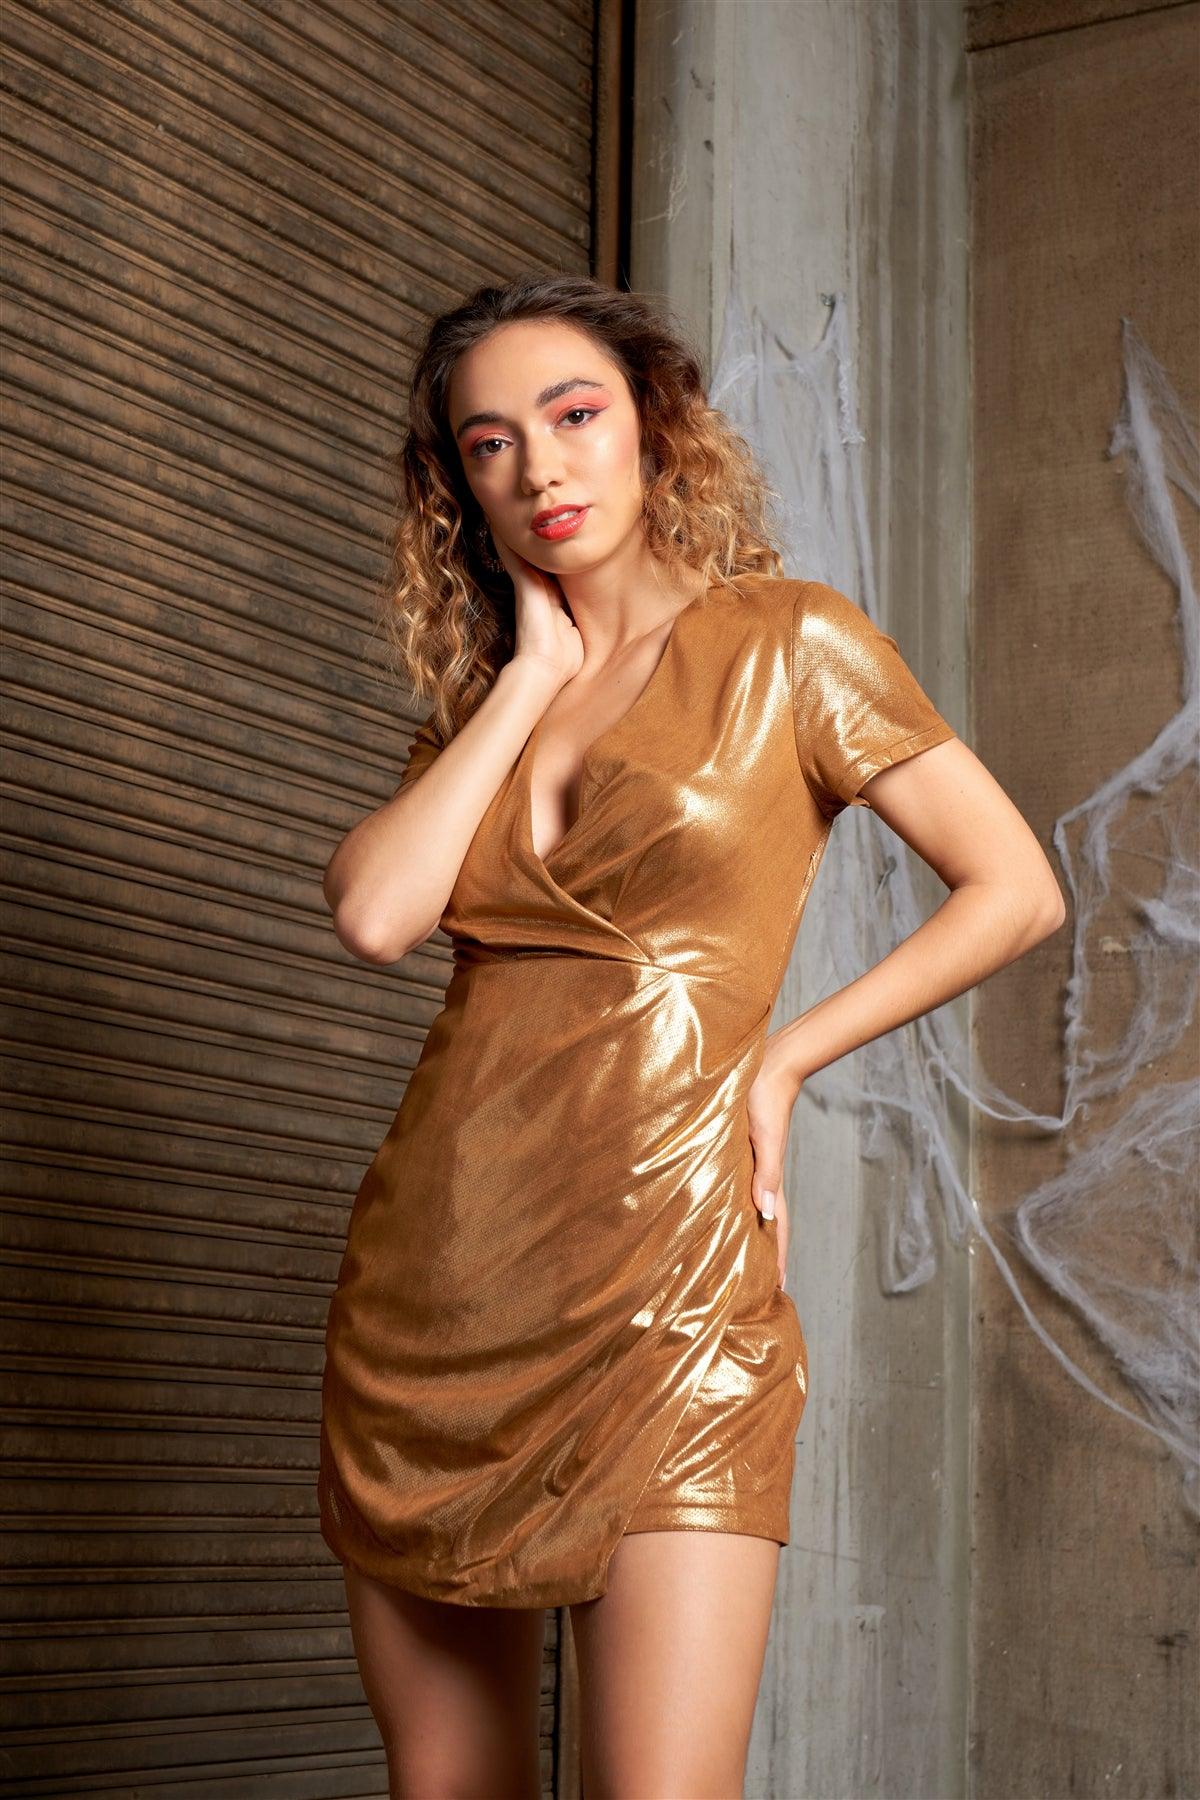 Liquid Gold Deep Plunge V-Neck Short Sleeve Wrap Gathered Side Detail Mini Dress /1-1-2-1